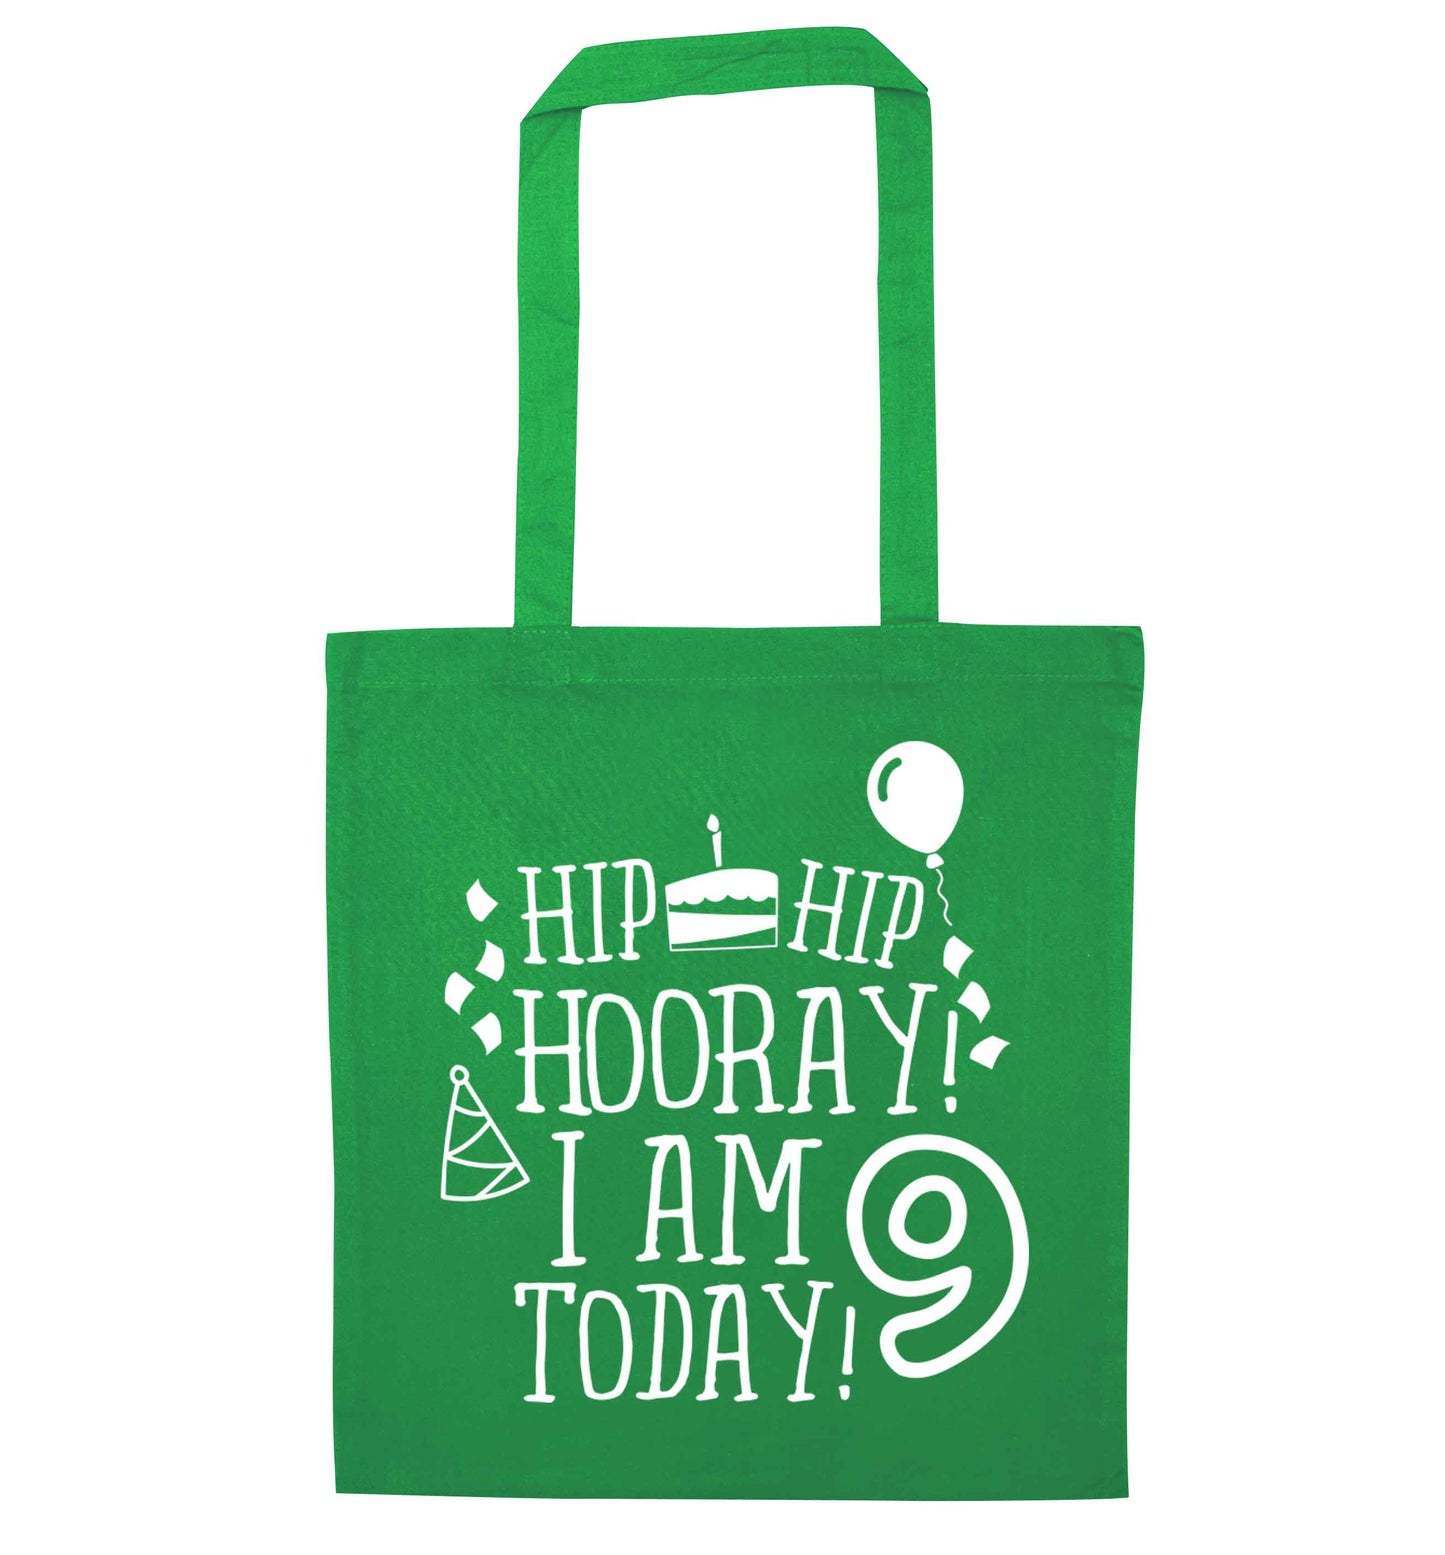 Hip hip hooray I am 9 today! green tote bag